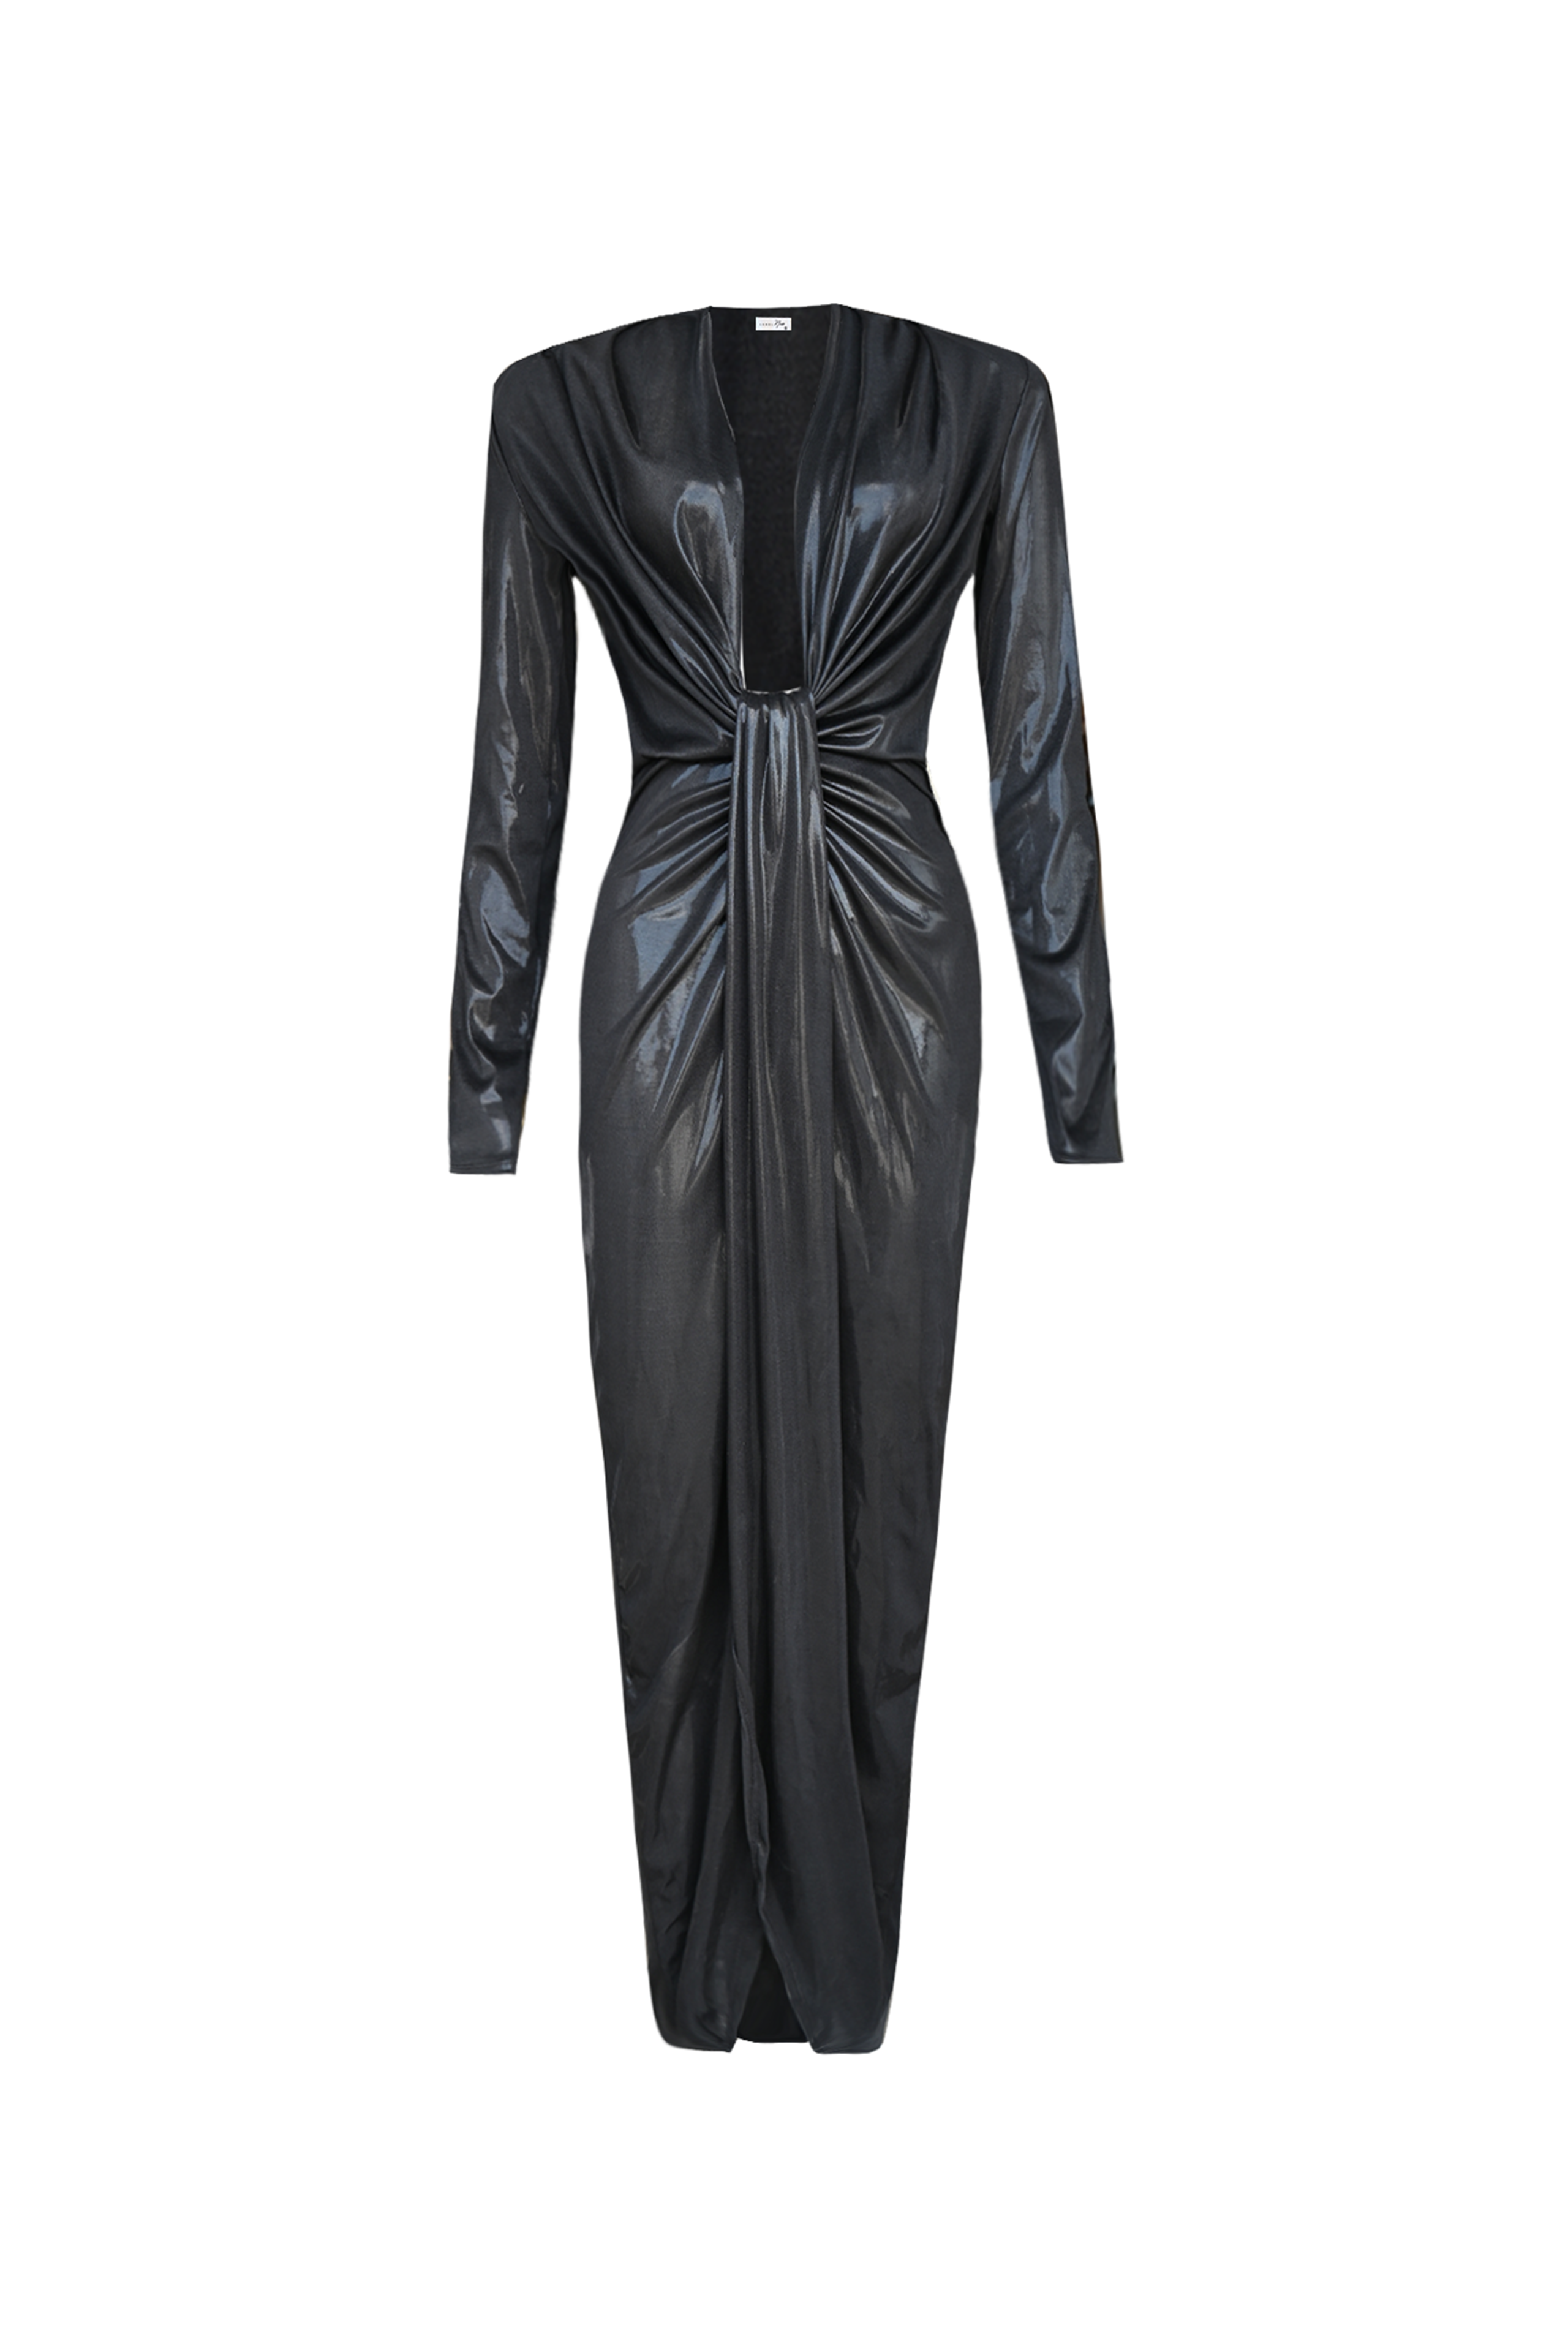 Heila Metallic Black Dress